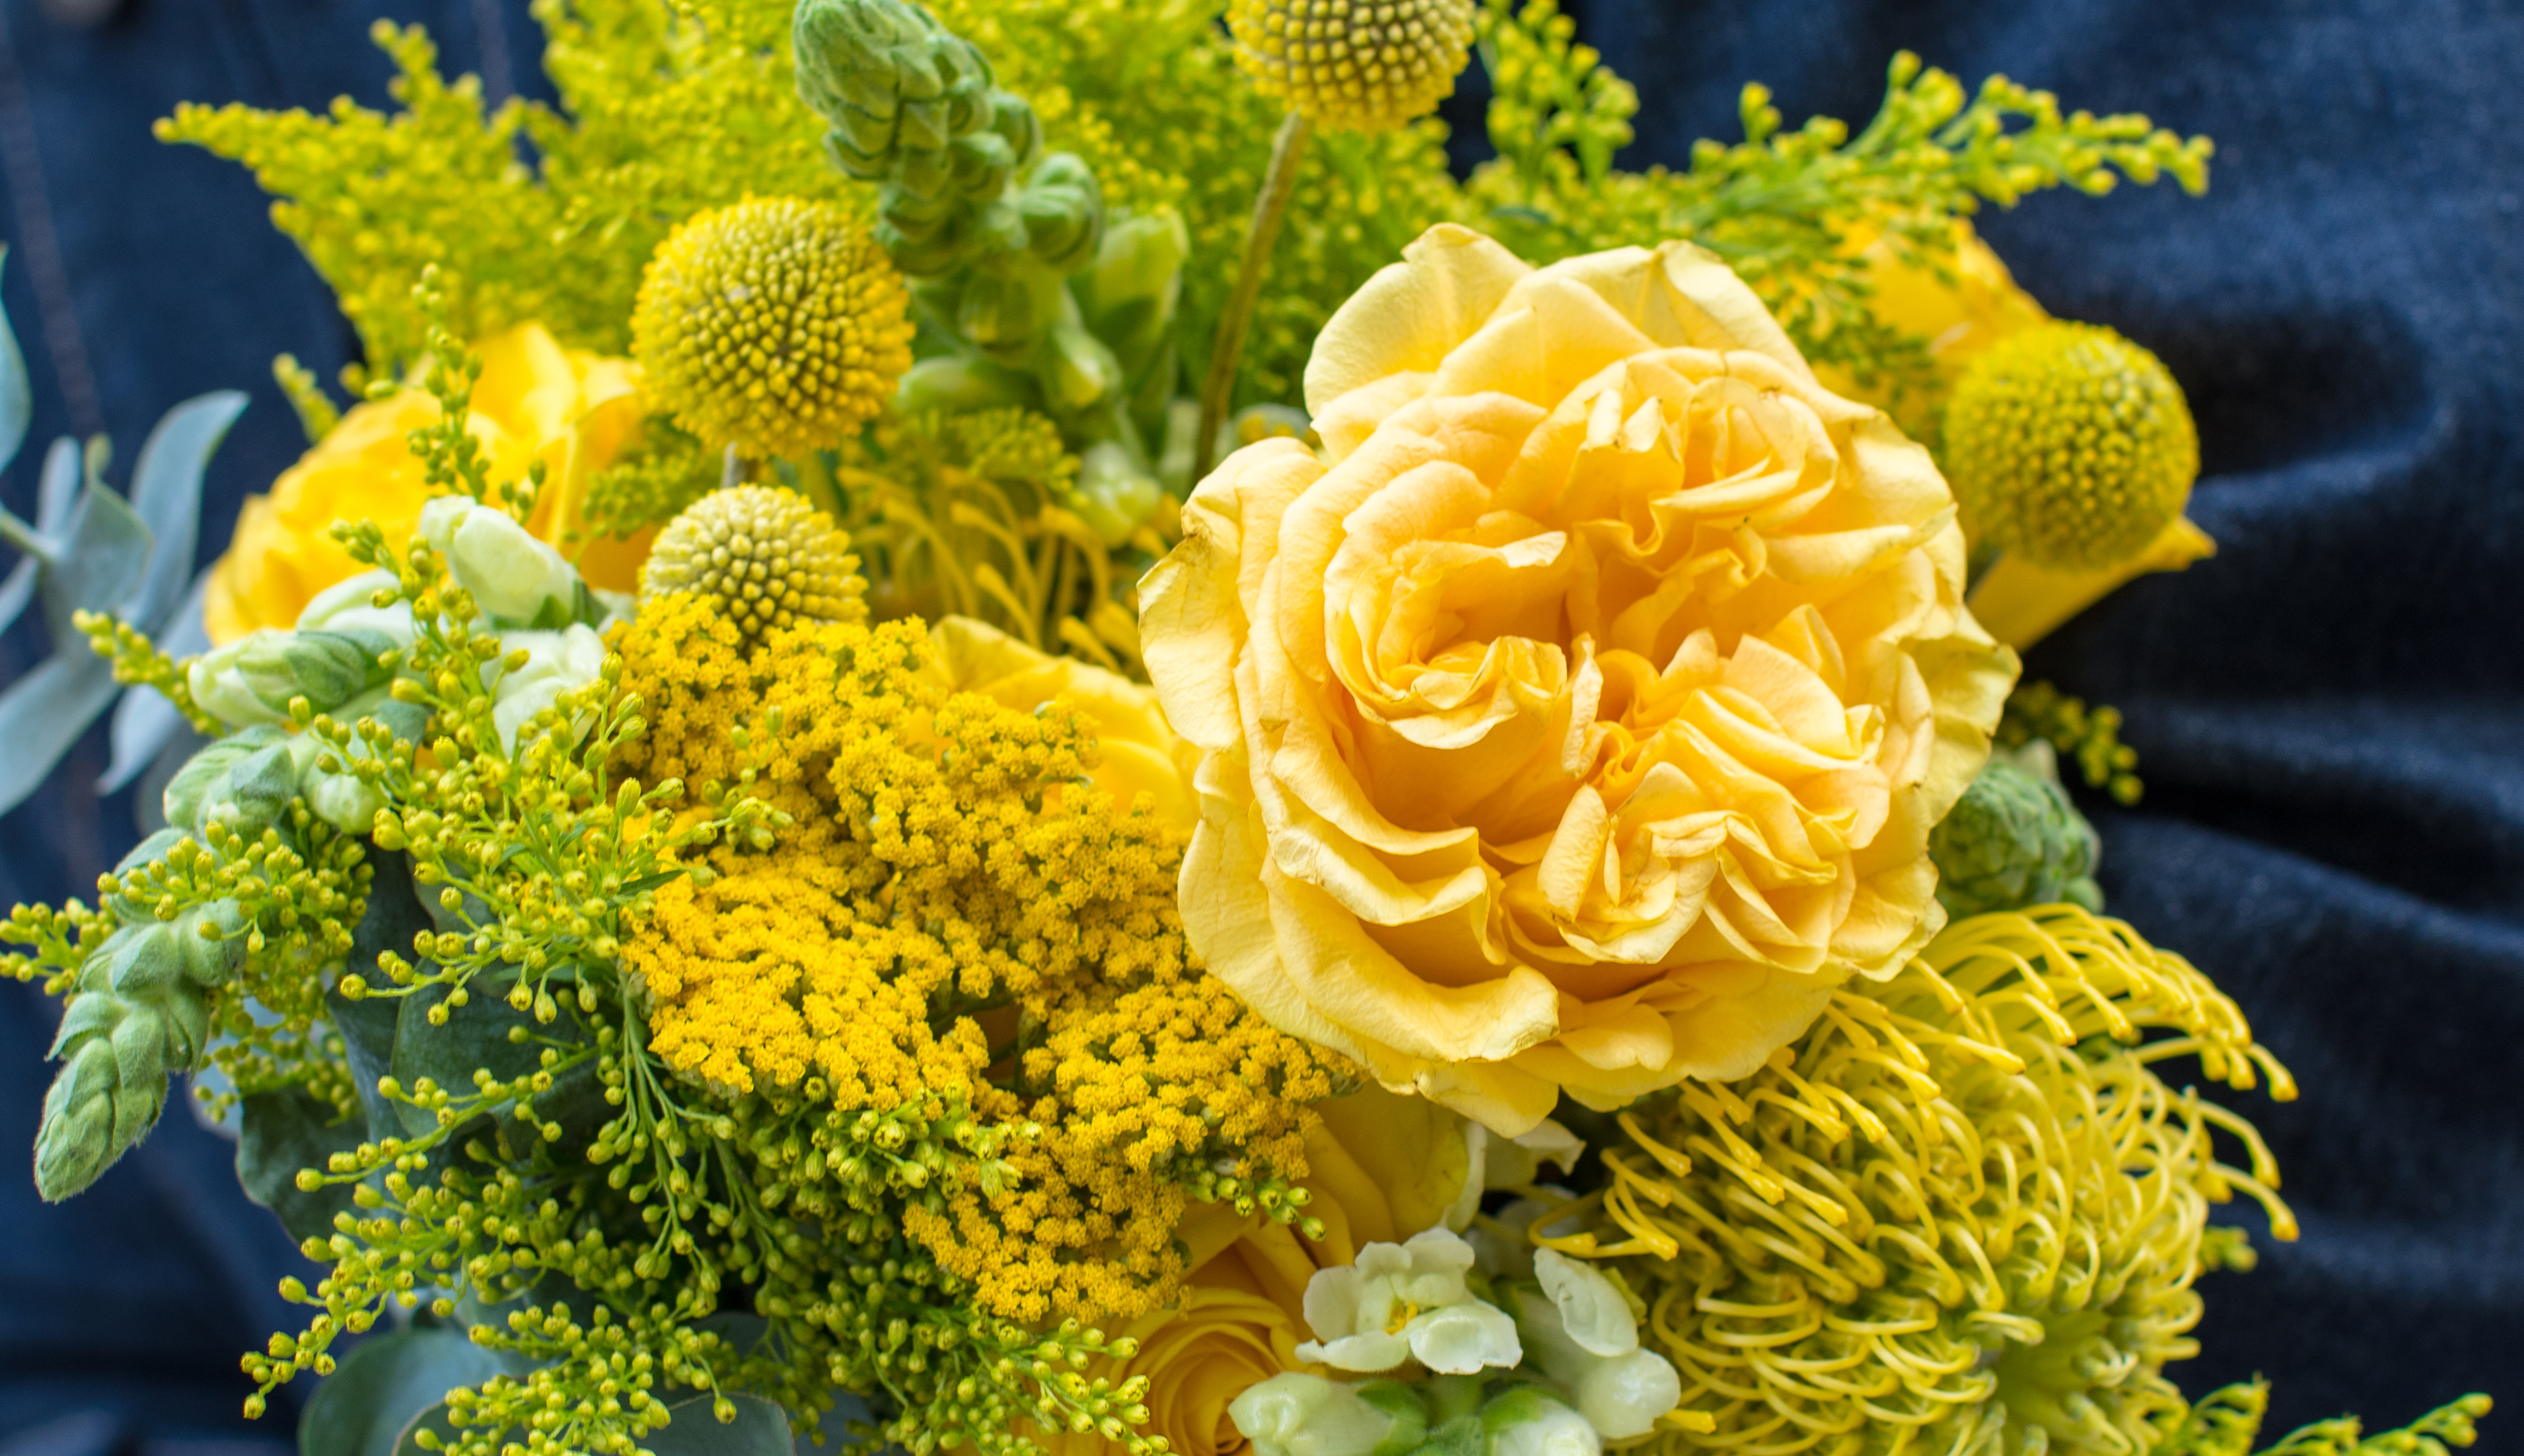 Close up shot of yellow flower bouquet